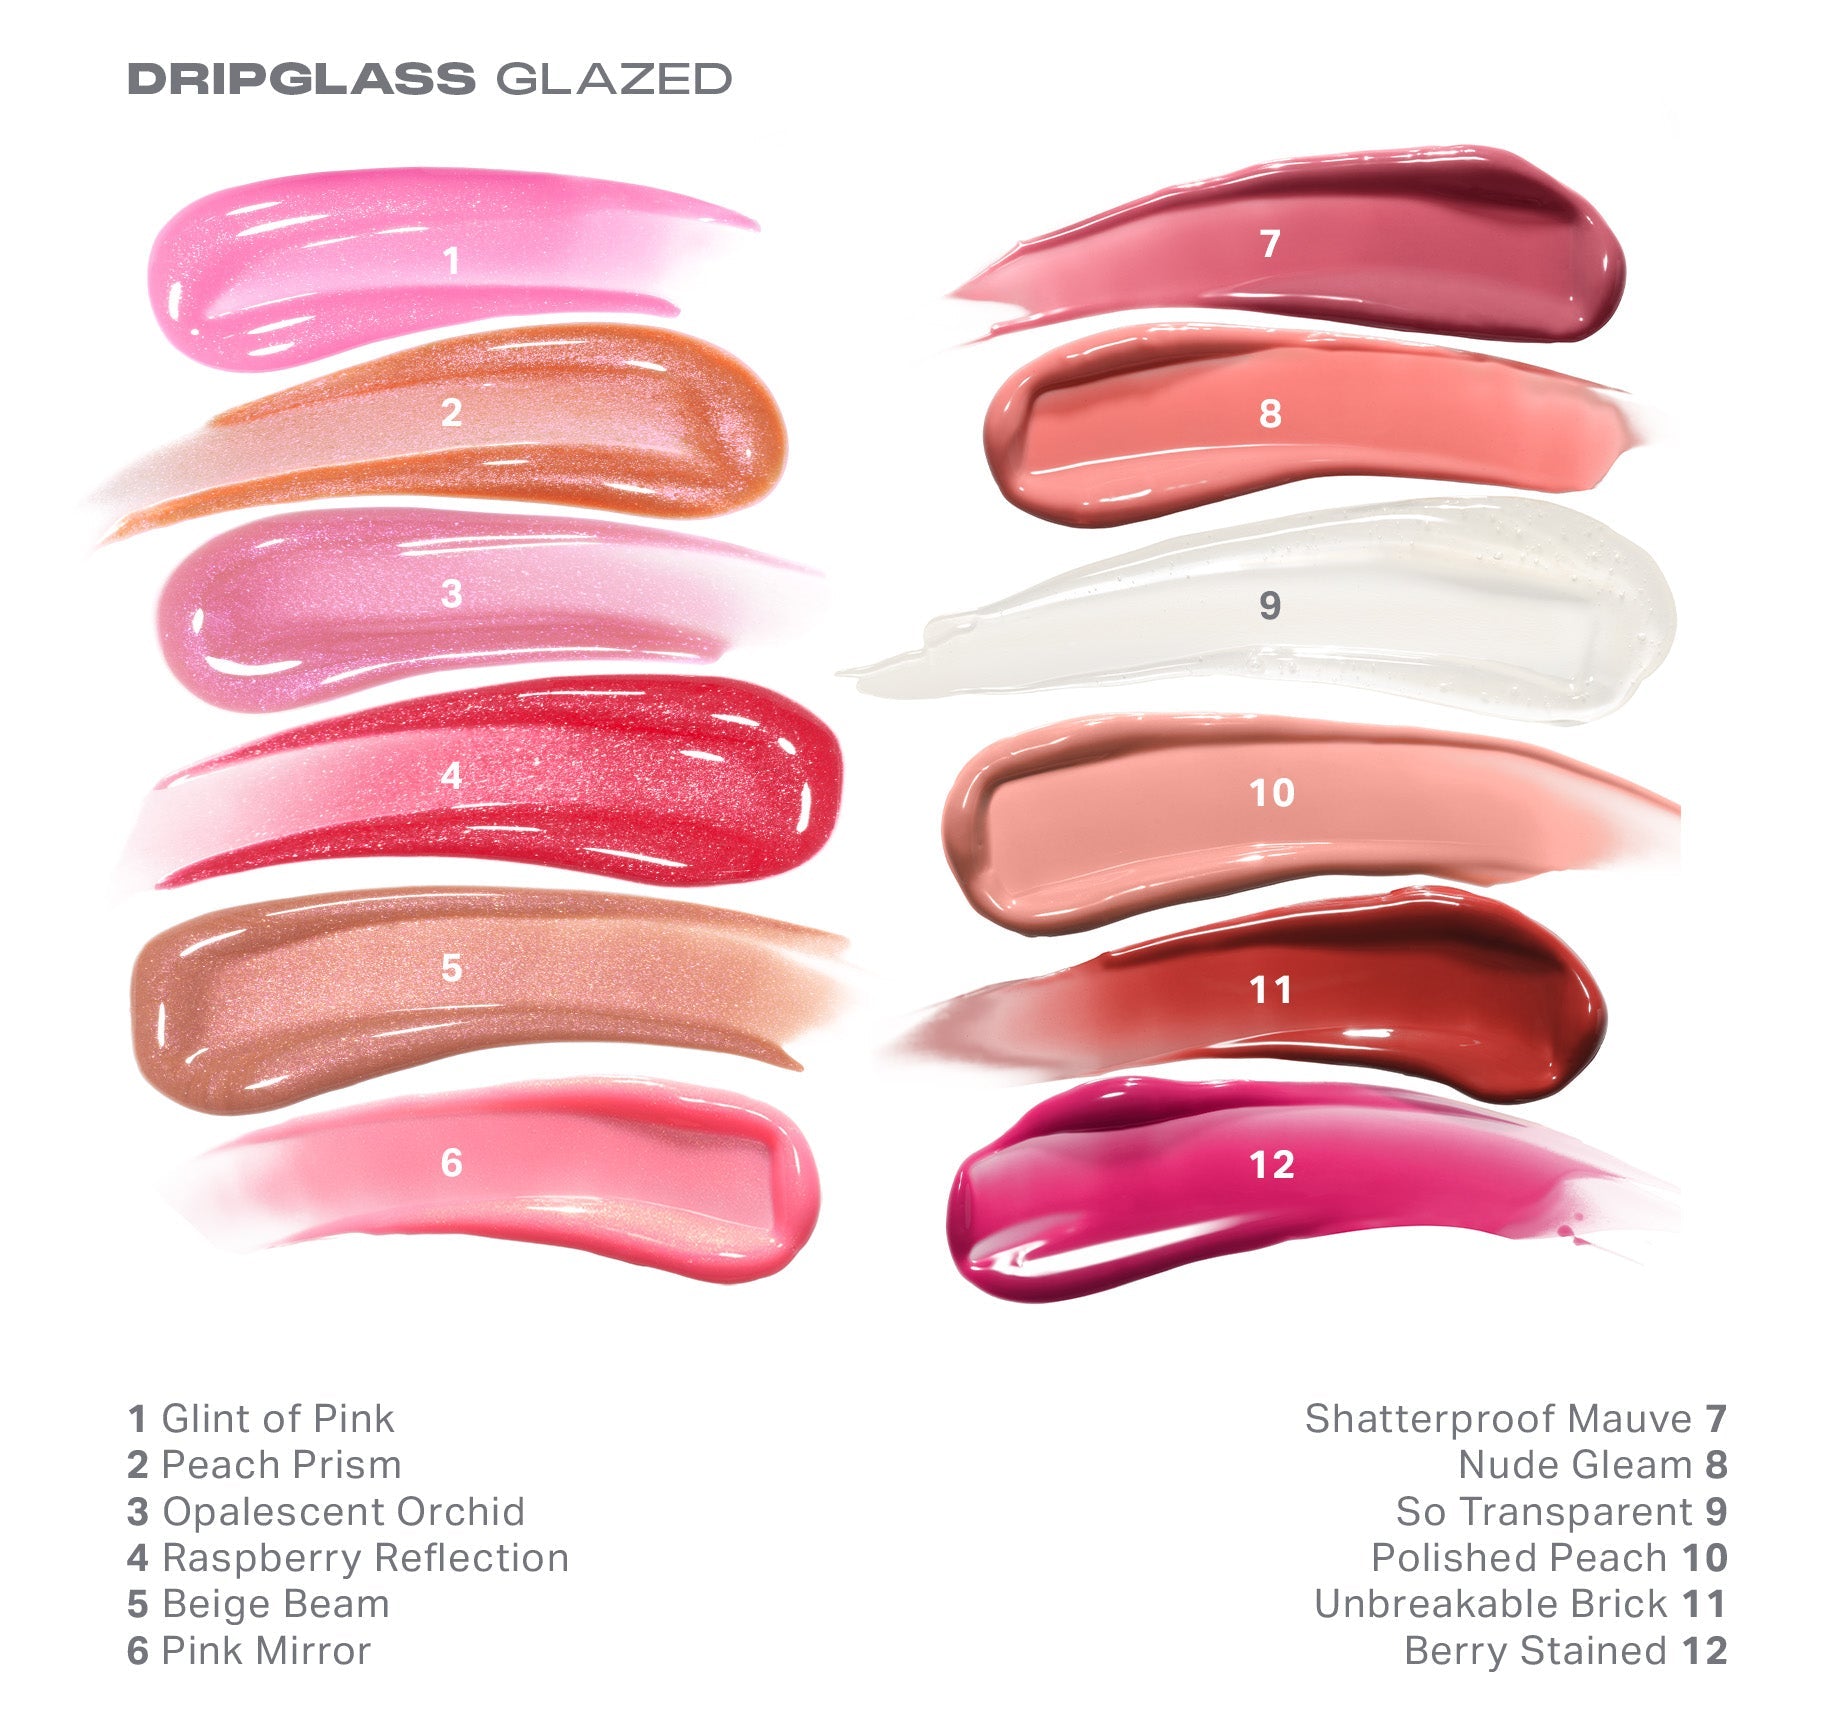 Dripglass Glazed High Shine Lip Gloss - Raspberry Reflection - Image 4